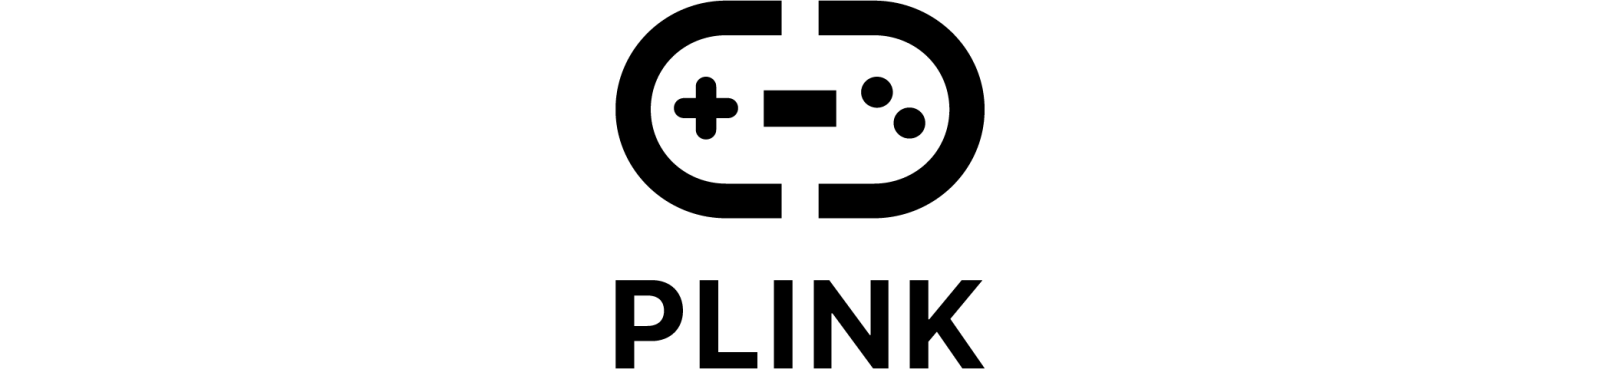 Plink - Black Logo